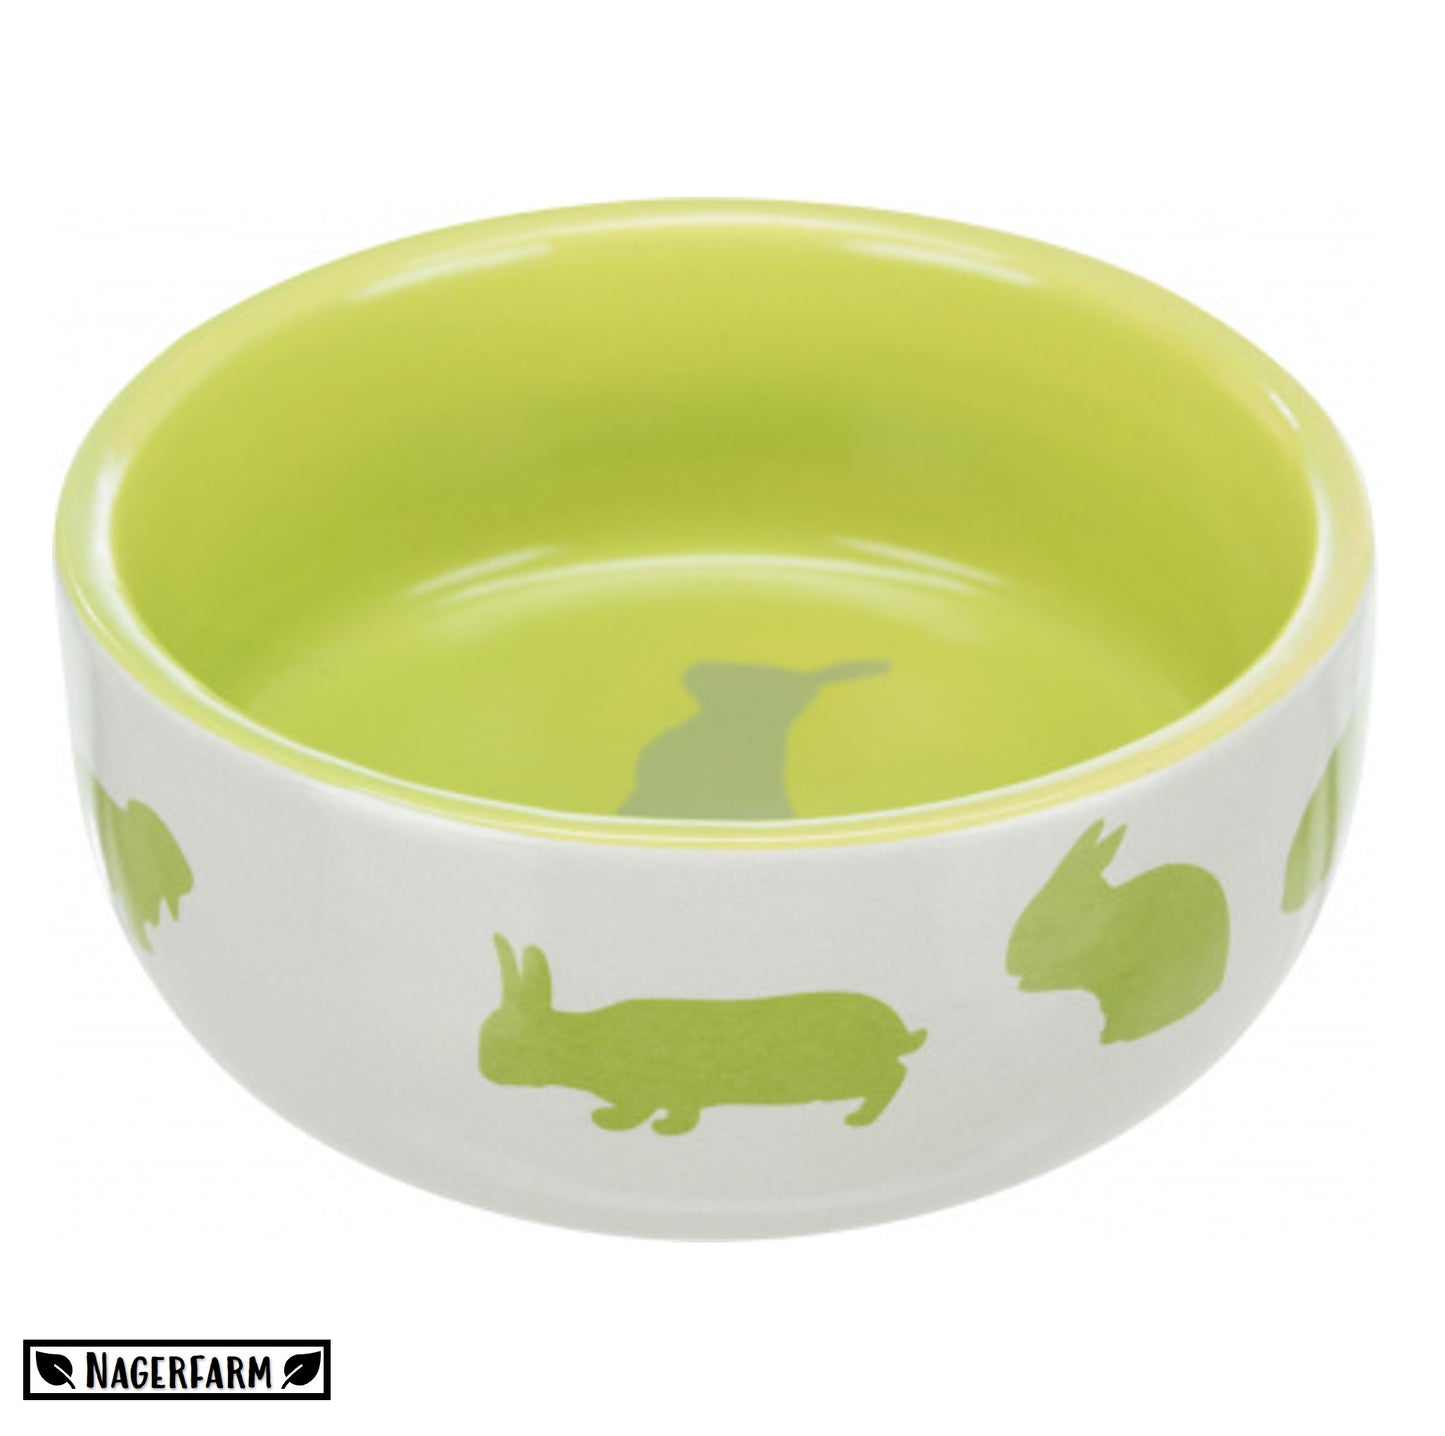 Trixie ceramic bowl